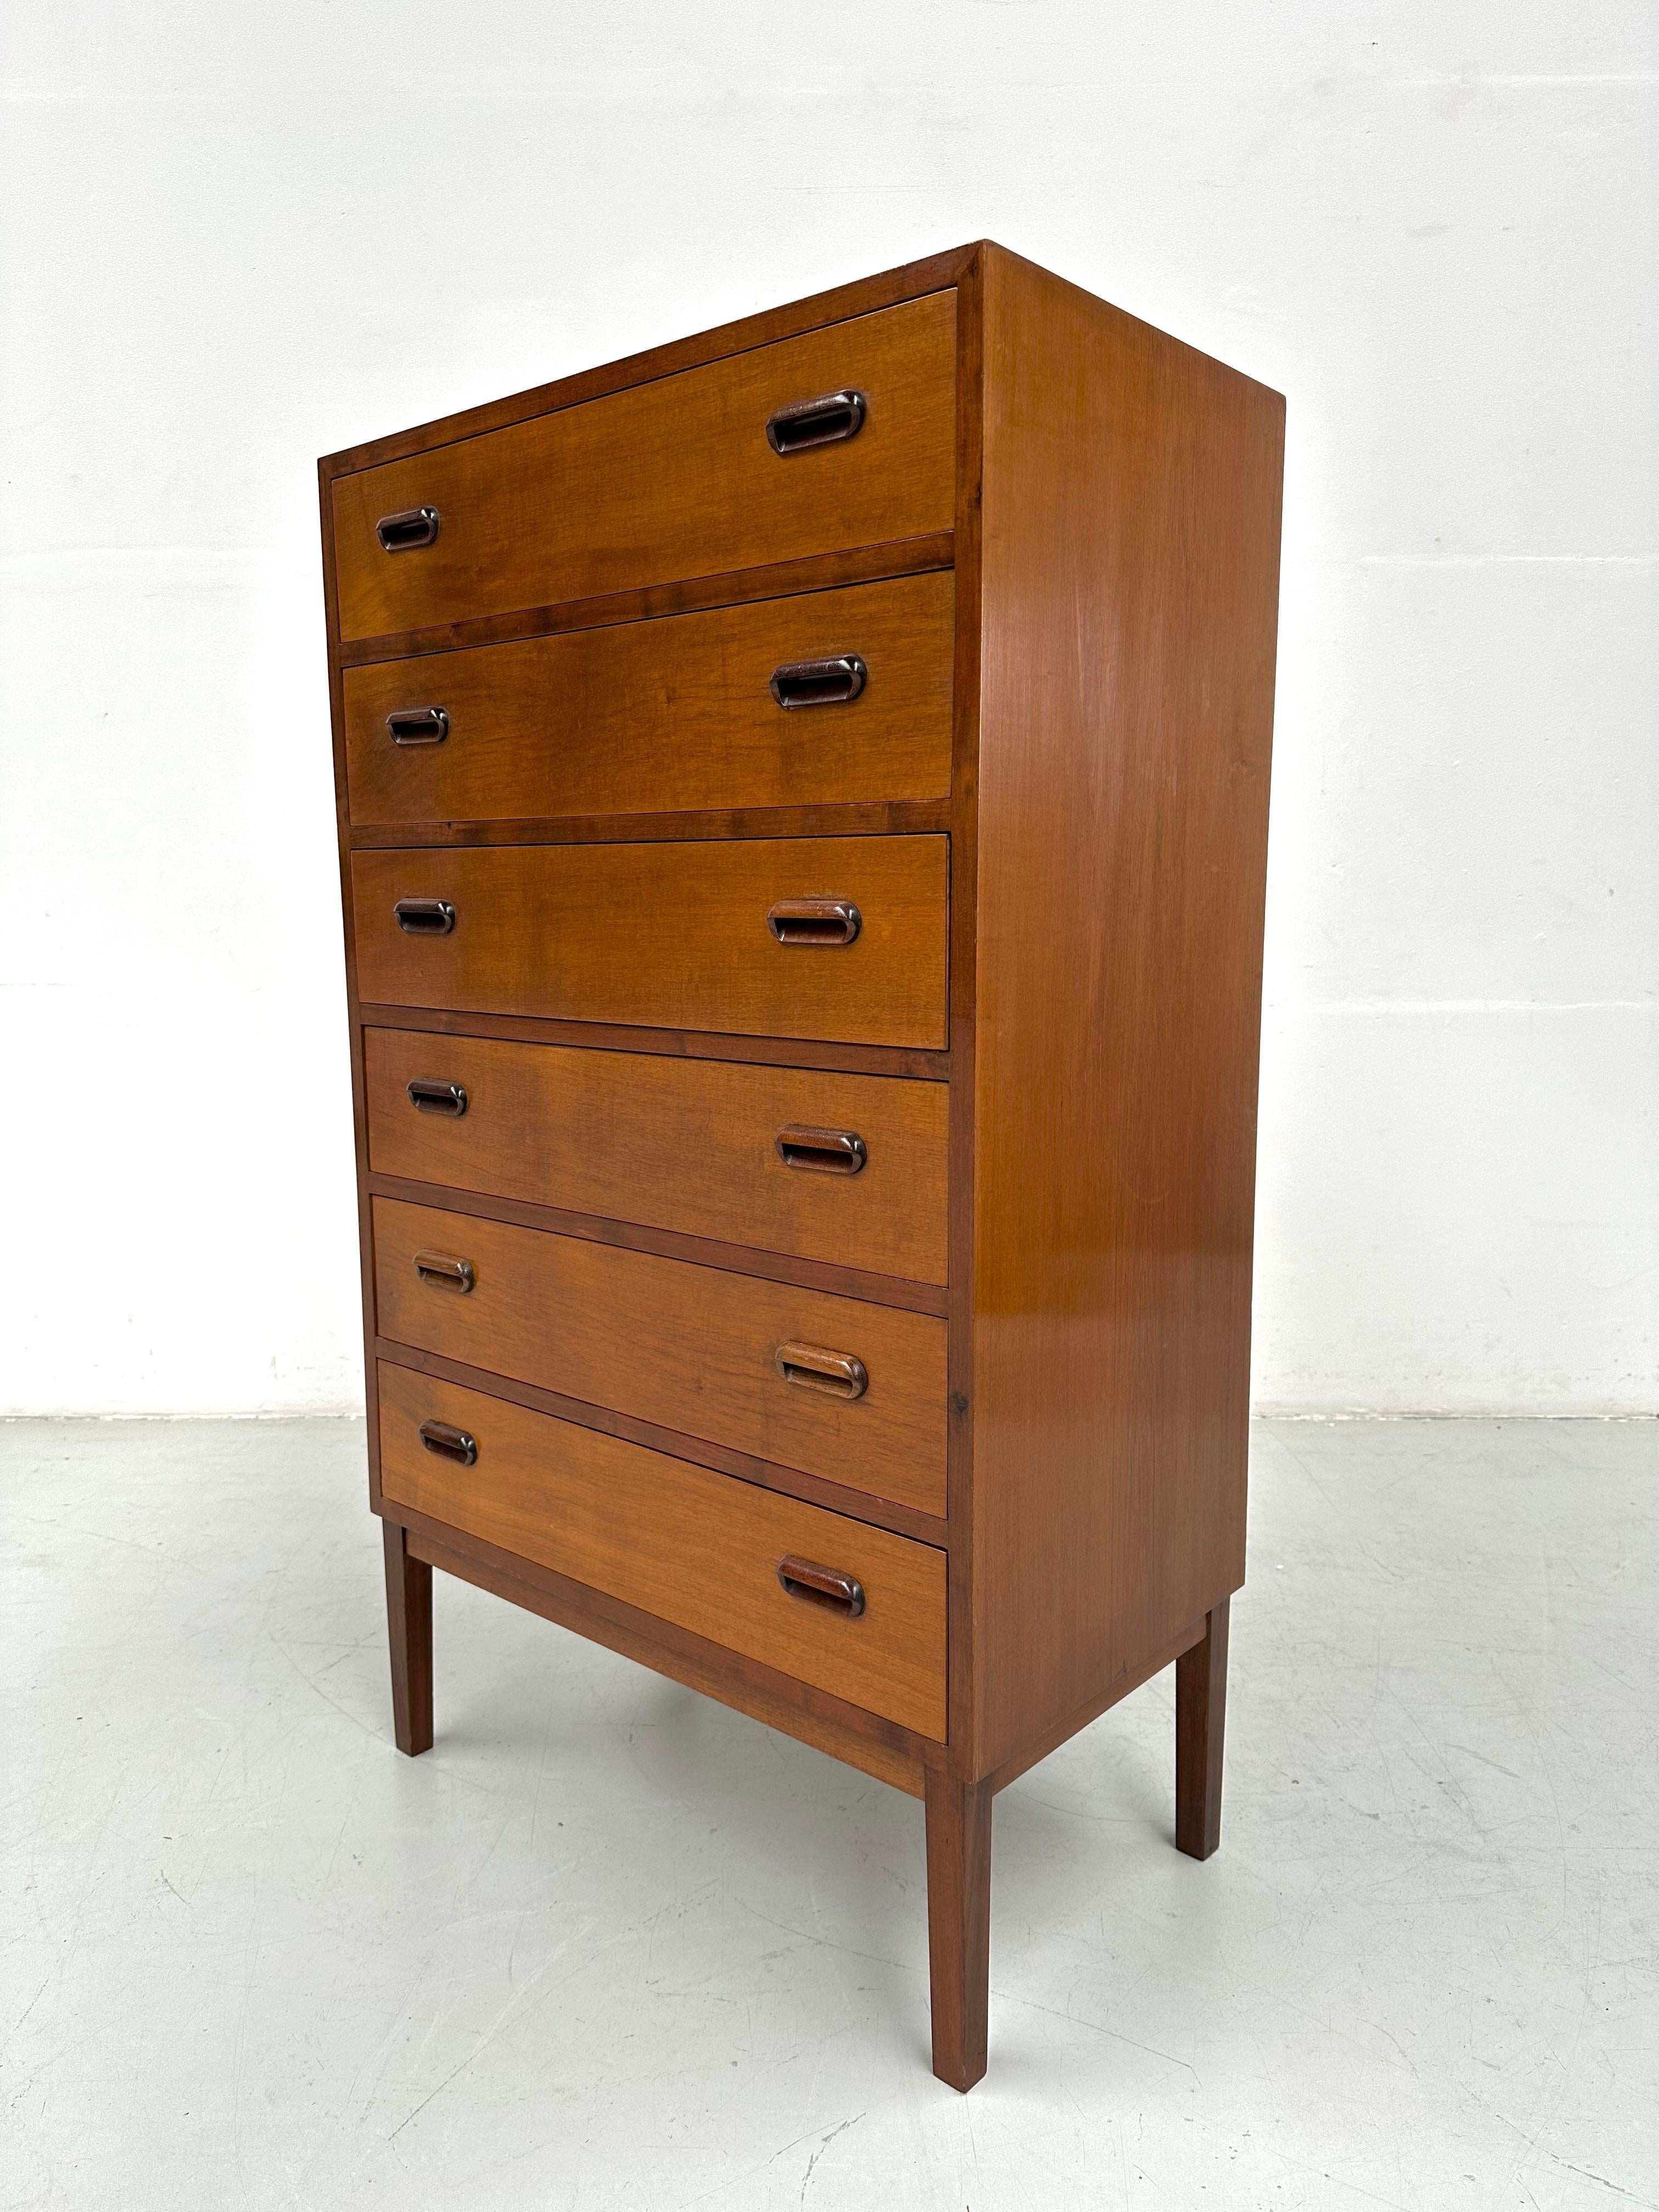 Danish Mid Century Modern Large Teak Refinished Dresser with 6 Drawers, 1960s. 2